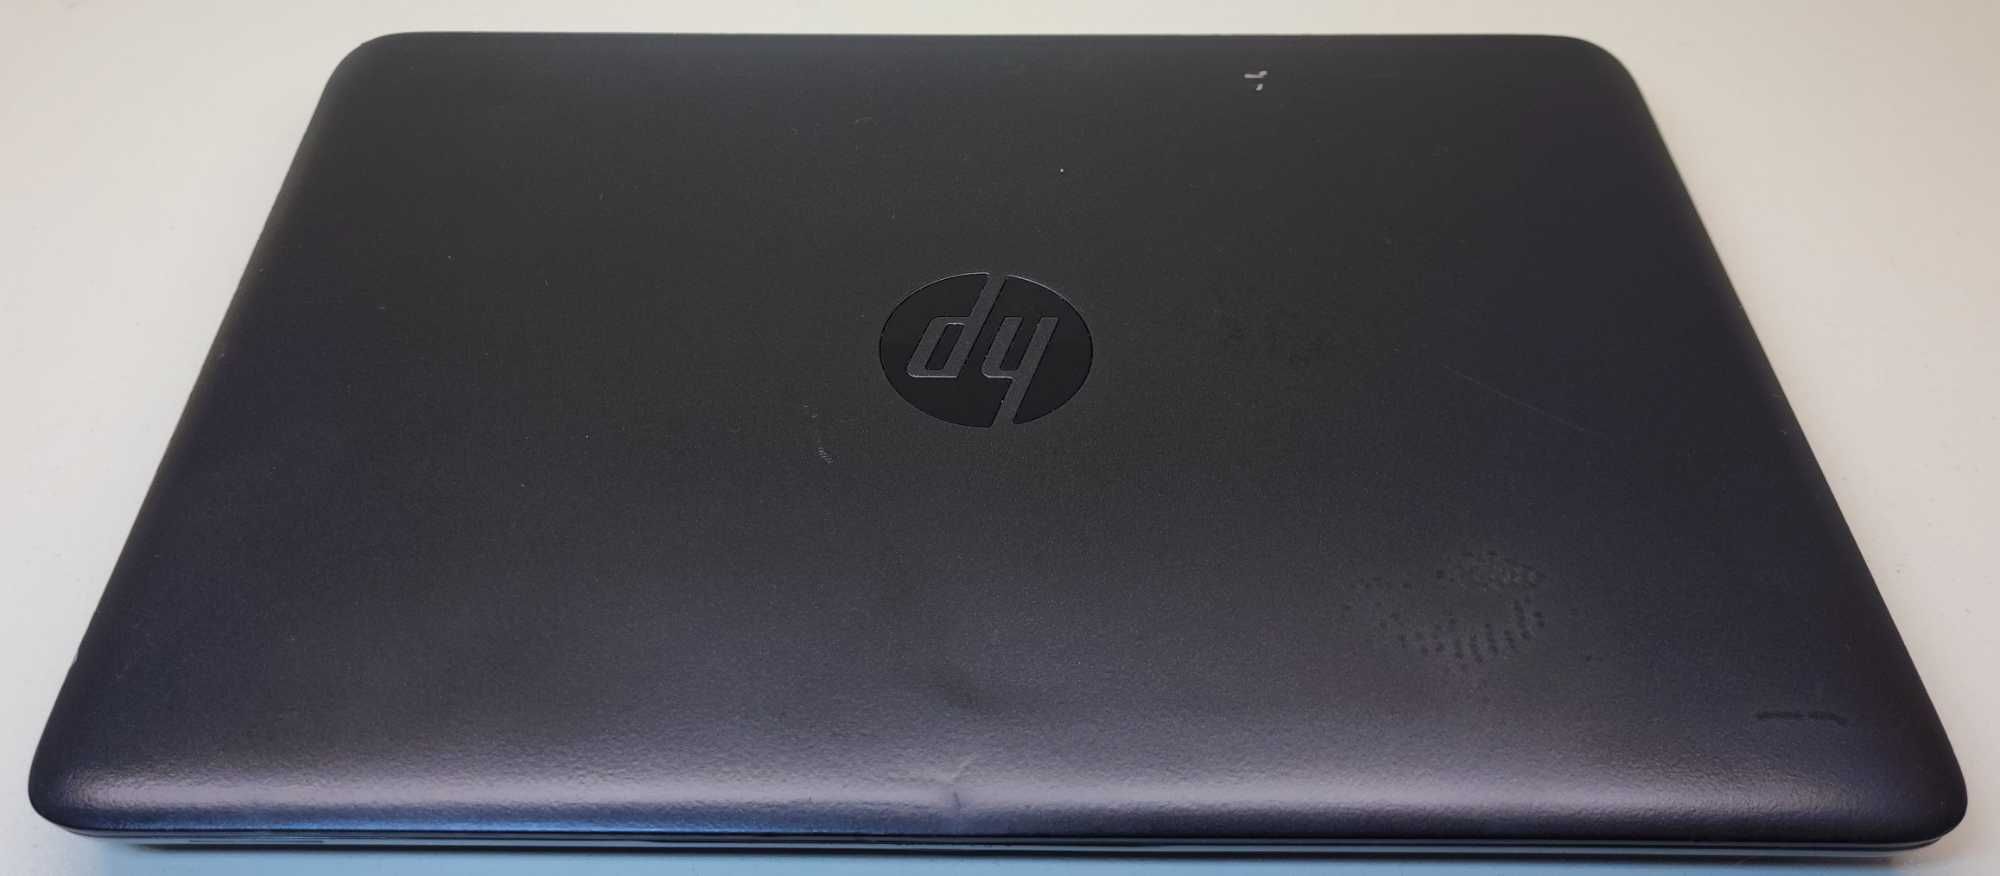 Ноутбук HP Elitebook 820g1 i7/8gb/240gb/12,5 HD/WIN10